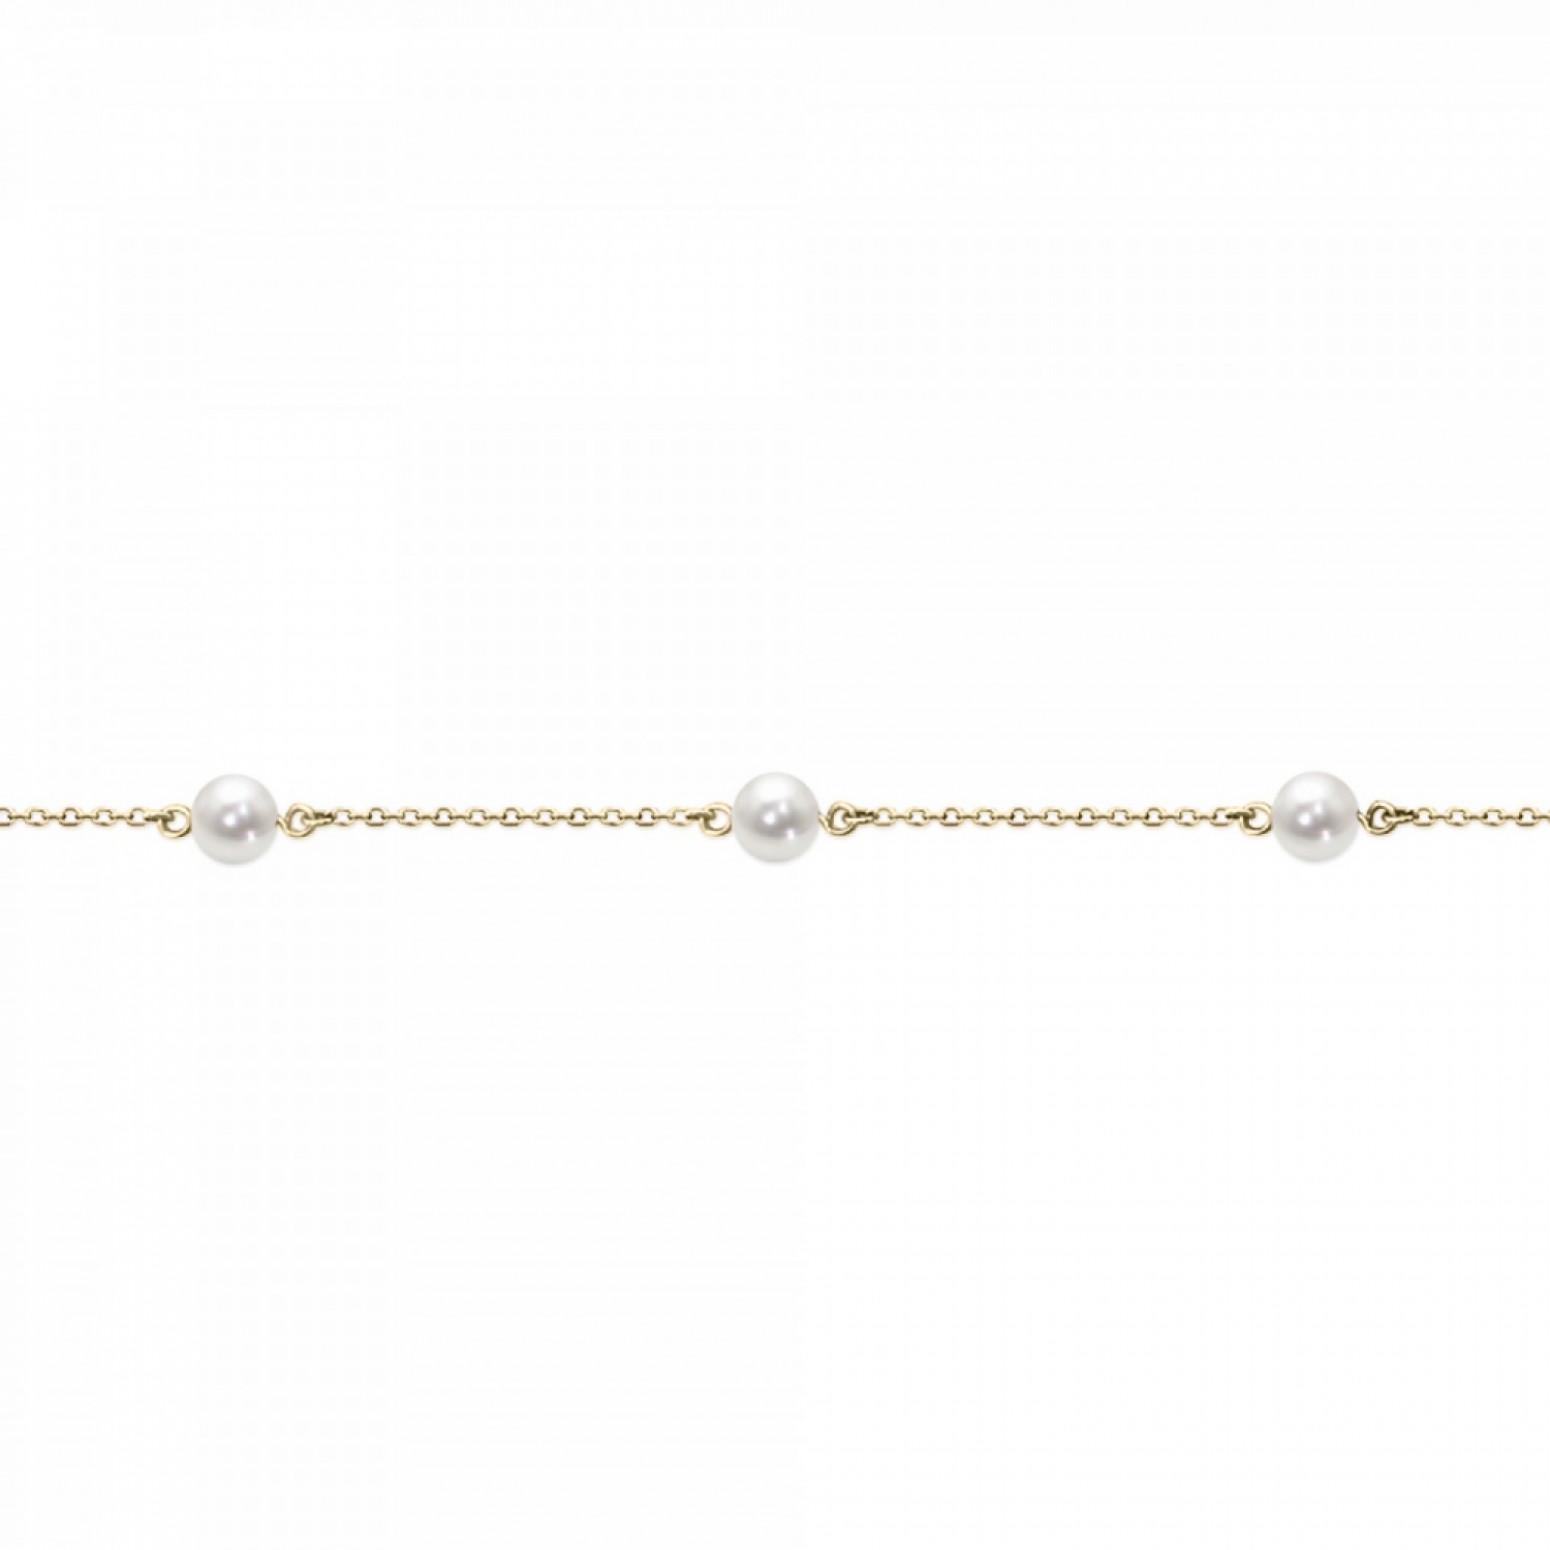 Bracelet Κ14 gold with pearls, H br2103 BRACELETS Κοσμηματα - chrilia.gr